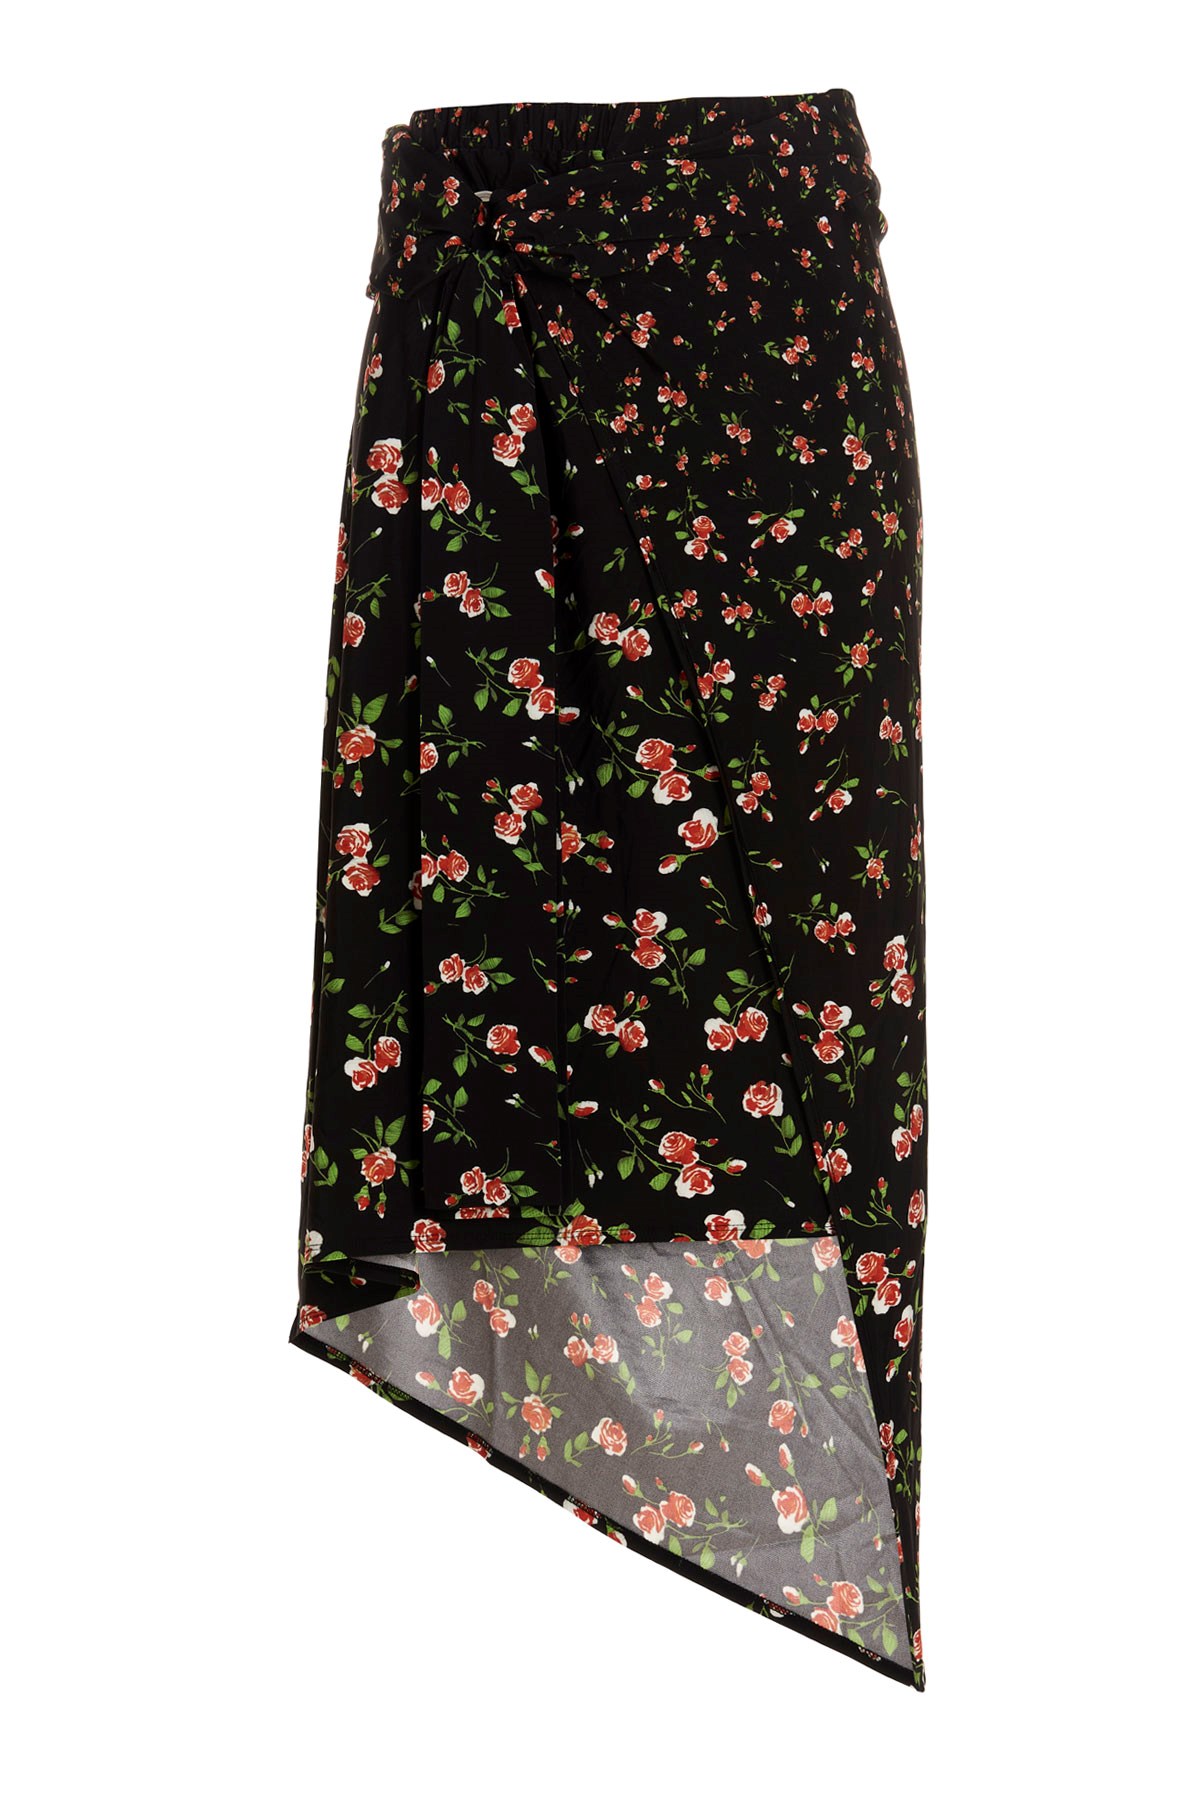 PACO RABANNE Floral Print Skirt